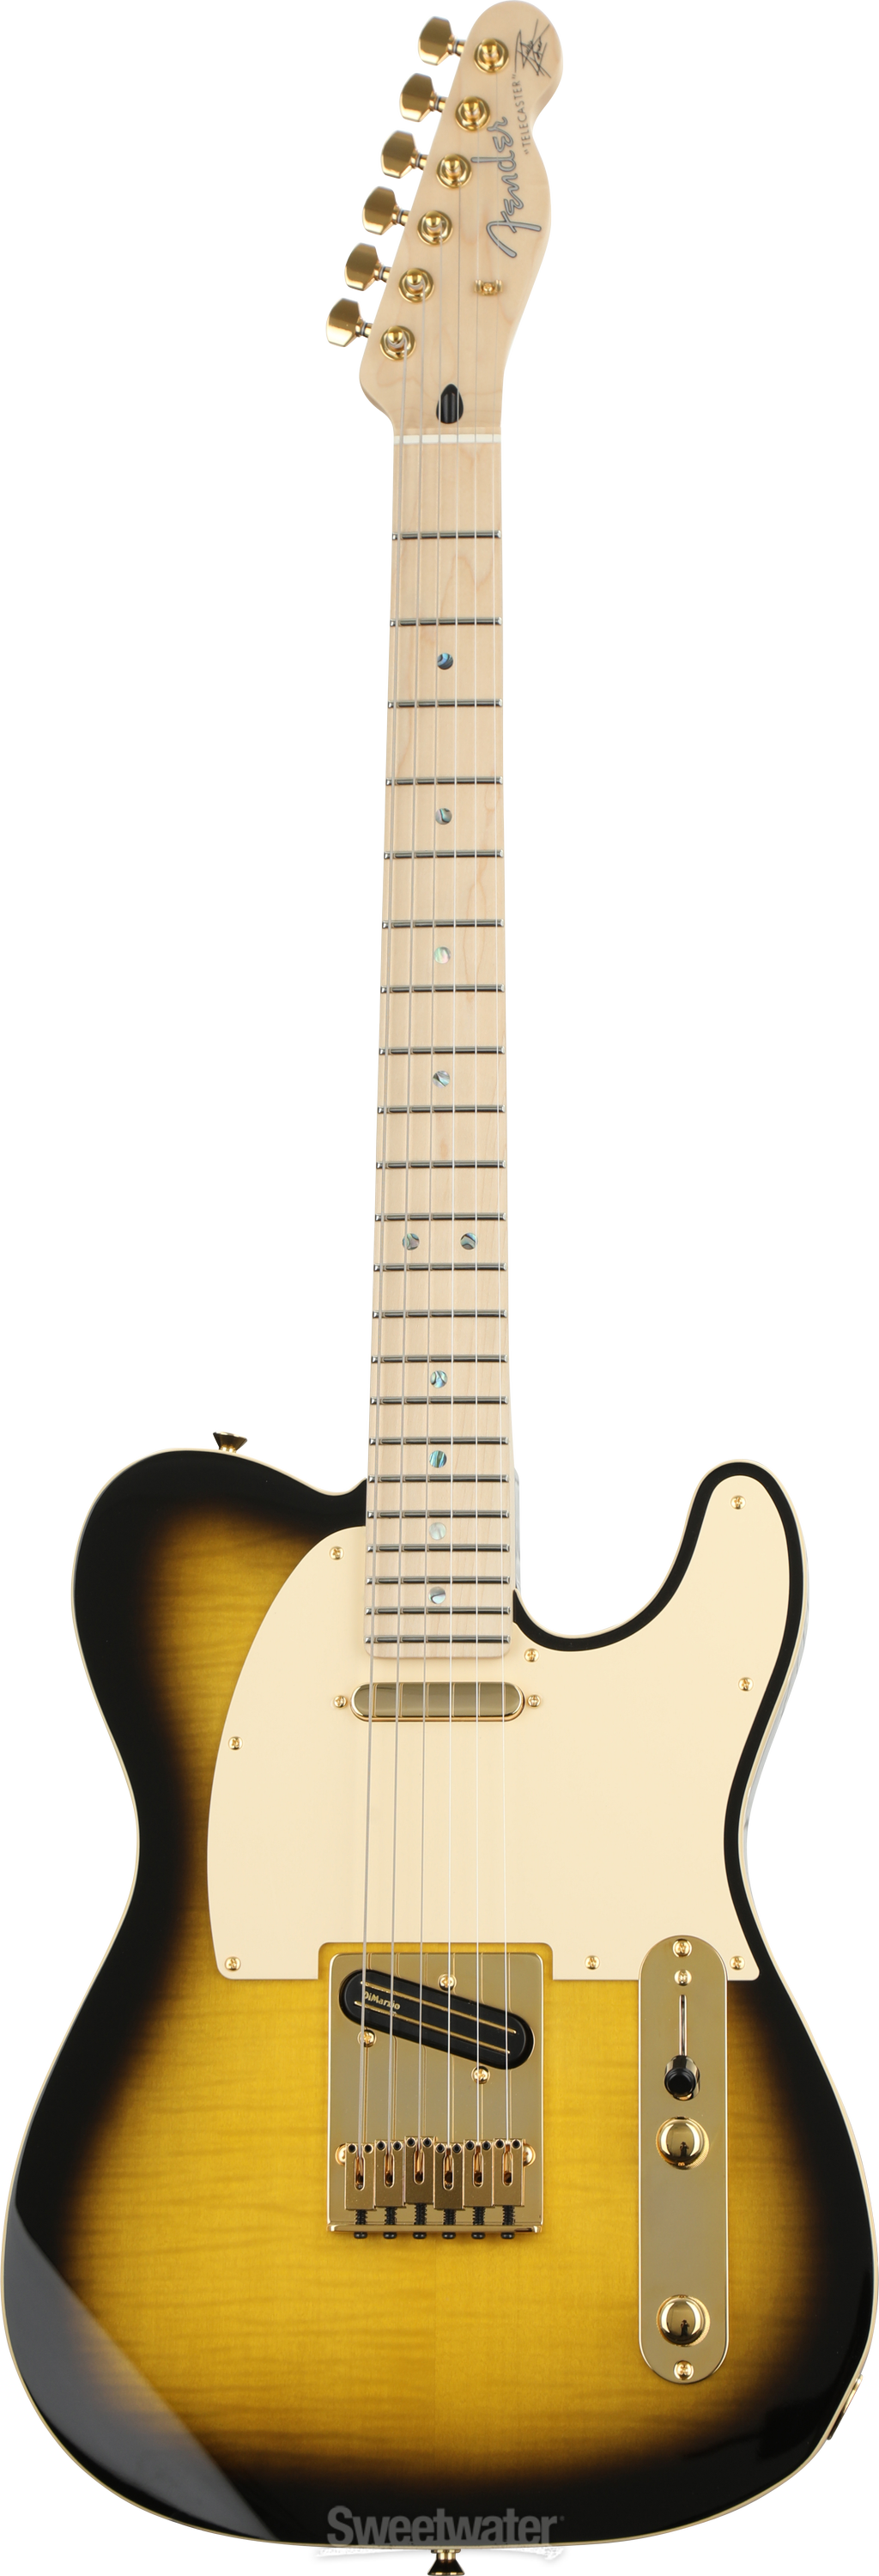 Fender Richie Kotzen Telecaster - 2-Tone Sunburst with Maple Fingerboard